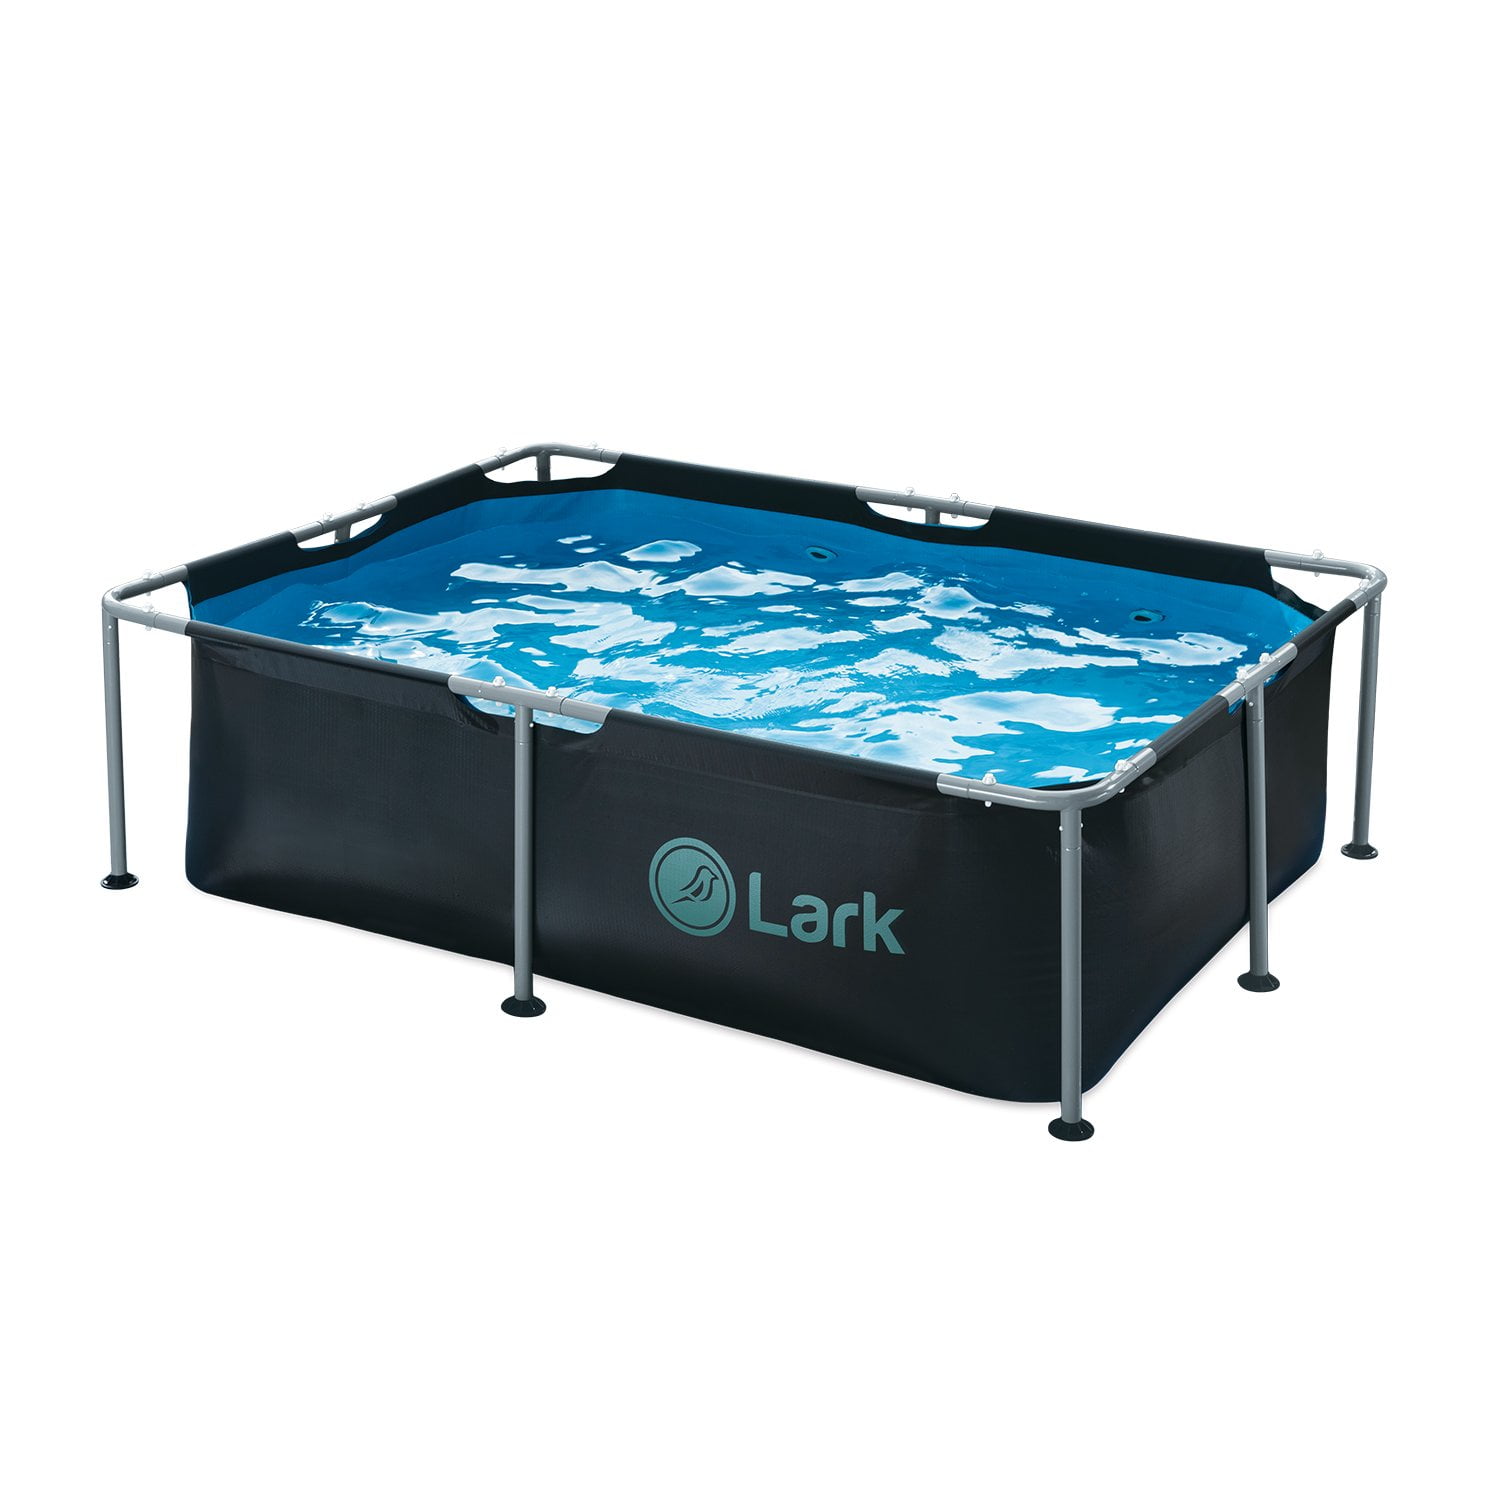 Lark Outdoors 7' Rectangular Metal Frame Sport Splash Pool